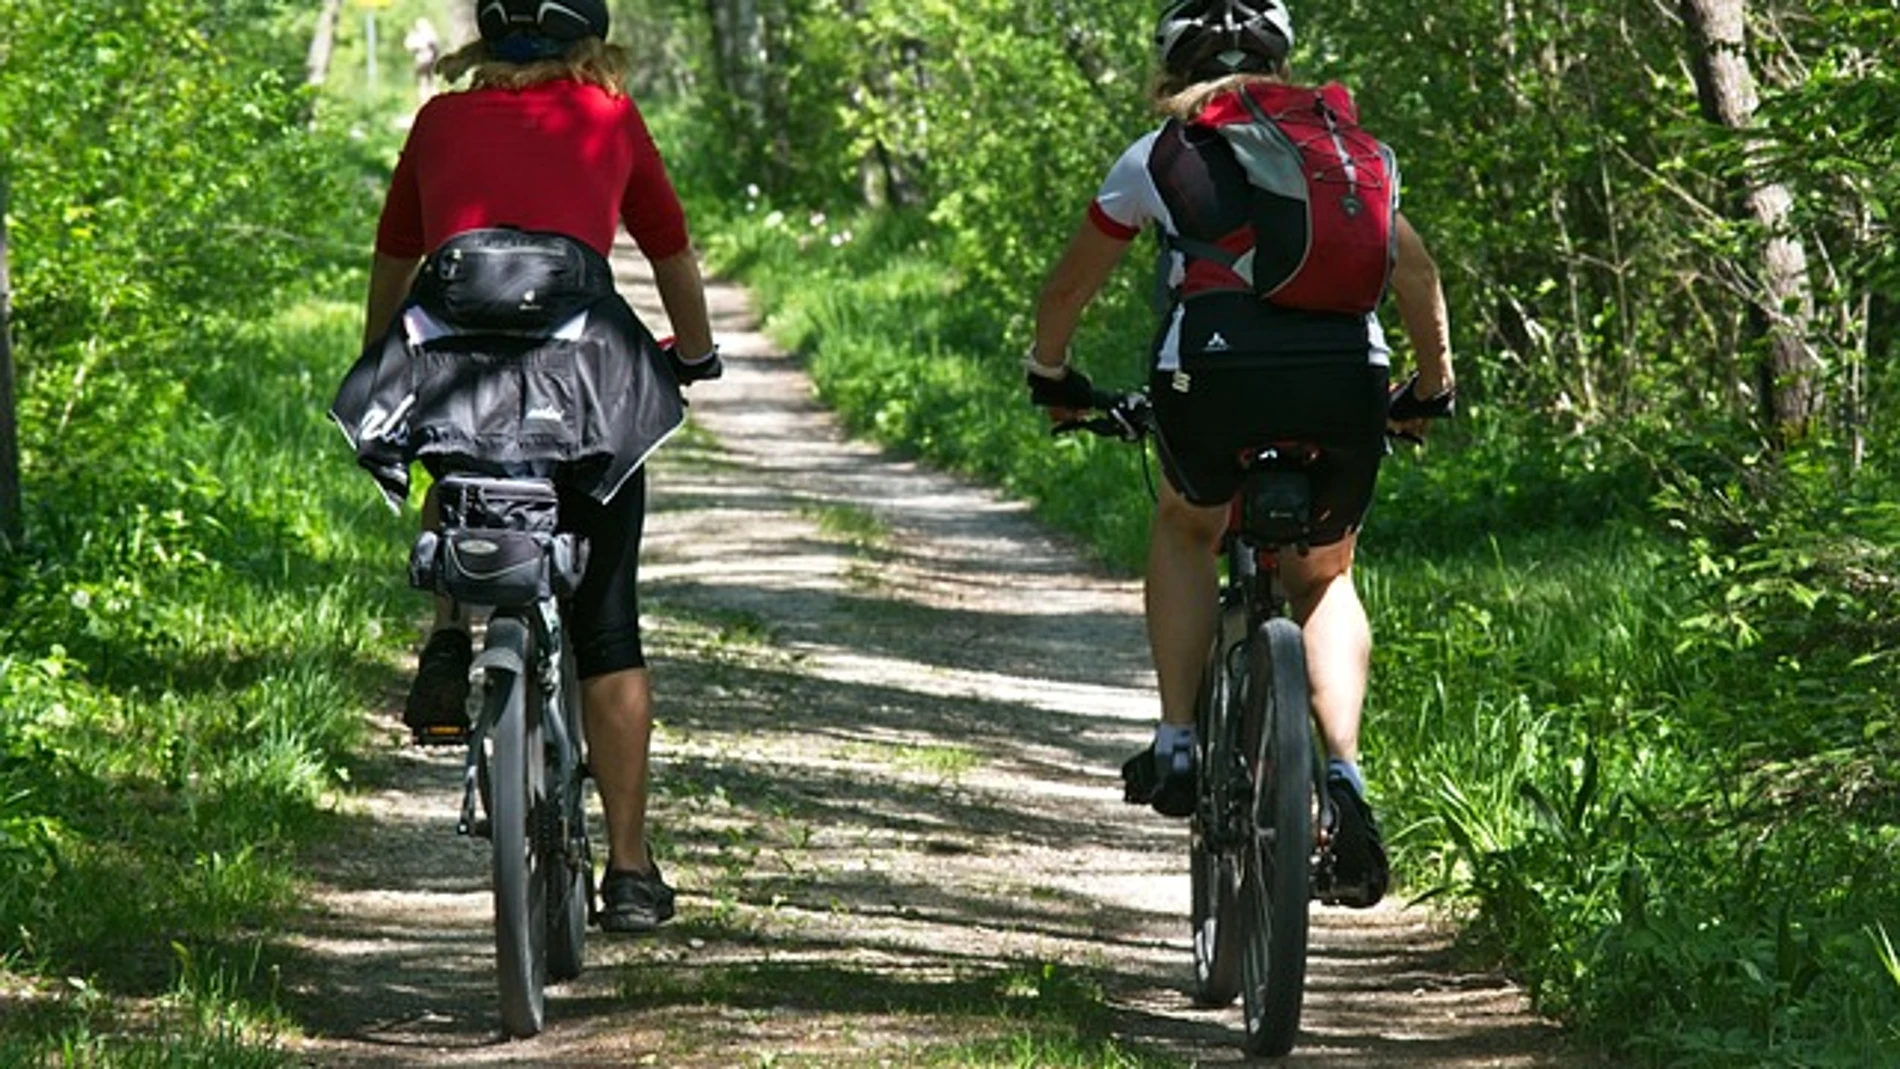 Dos ciclistas pasean en bici por un bosque